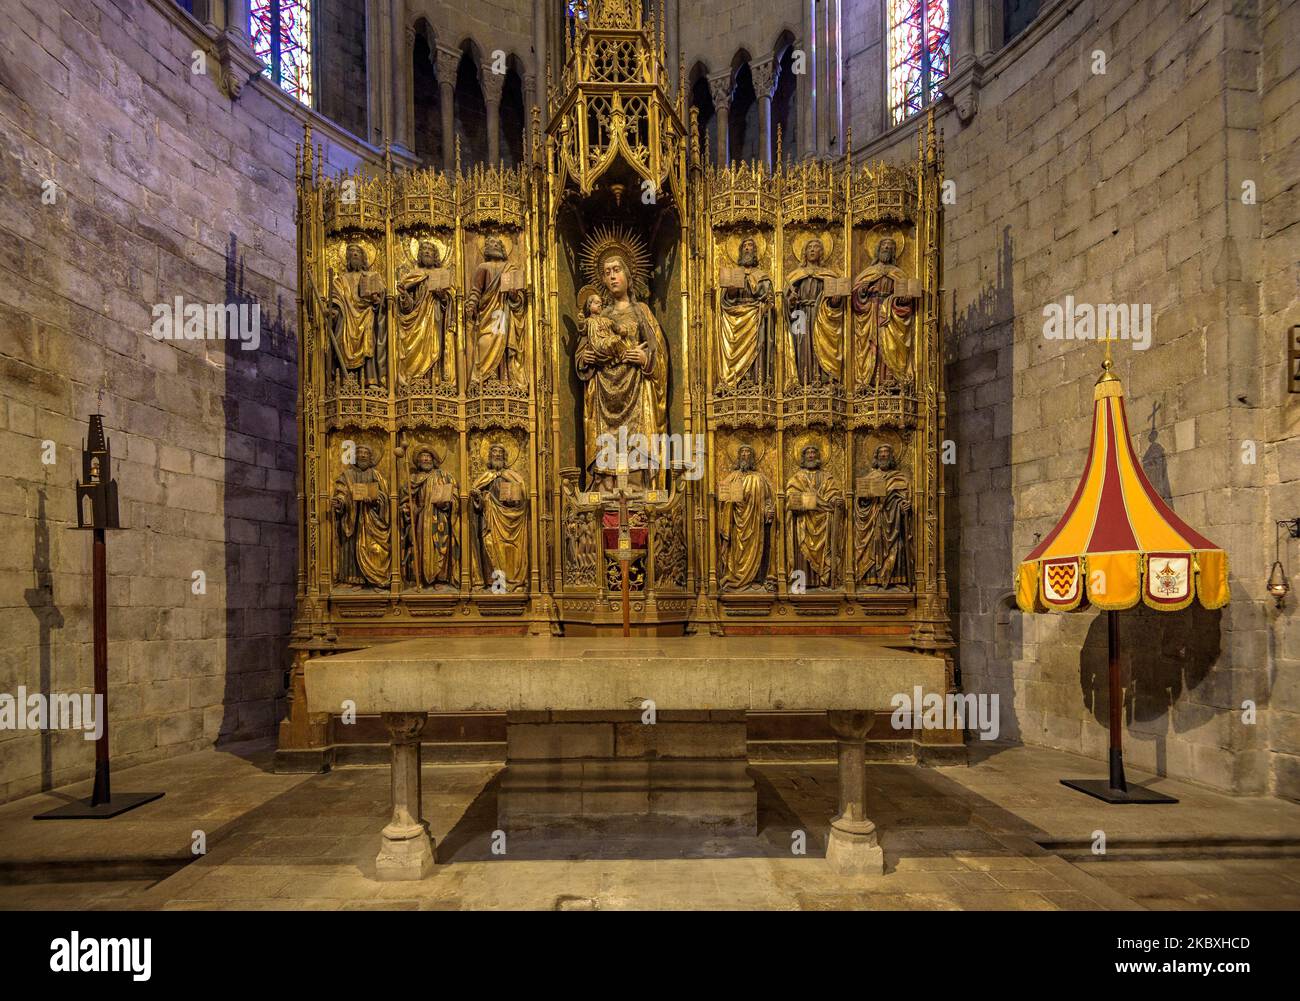 Altarpiece in the apse of the basilica of Sant Feliu in Girona (Catalonia, Spain) ESP: Retablo al ábside de la basílica de Sant Feliu de Gerona Stock Photo